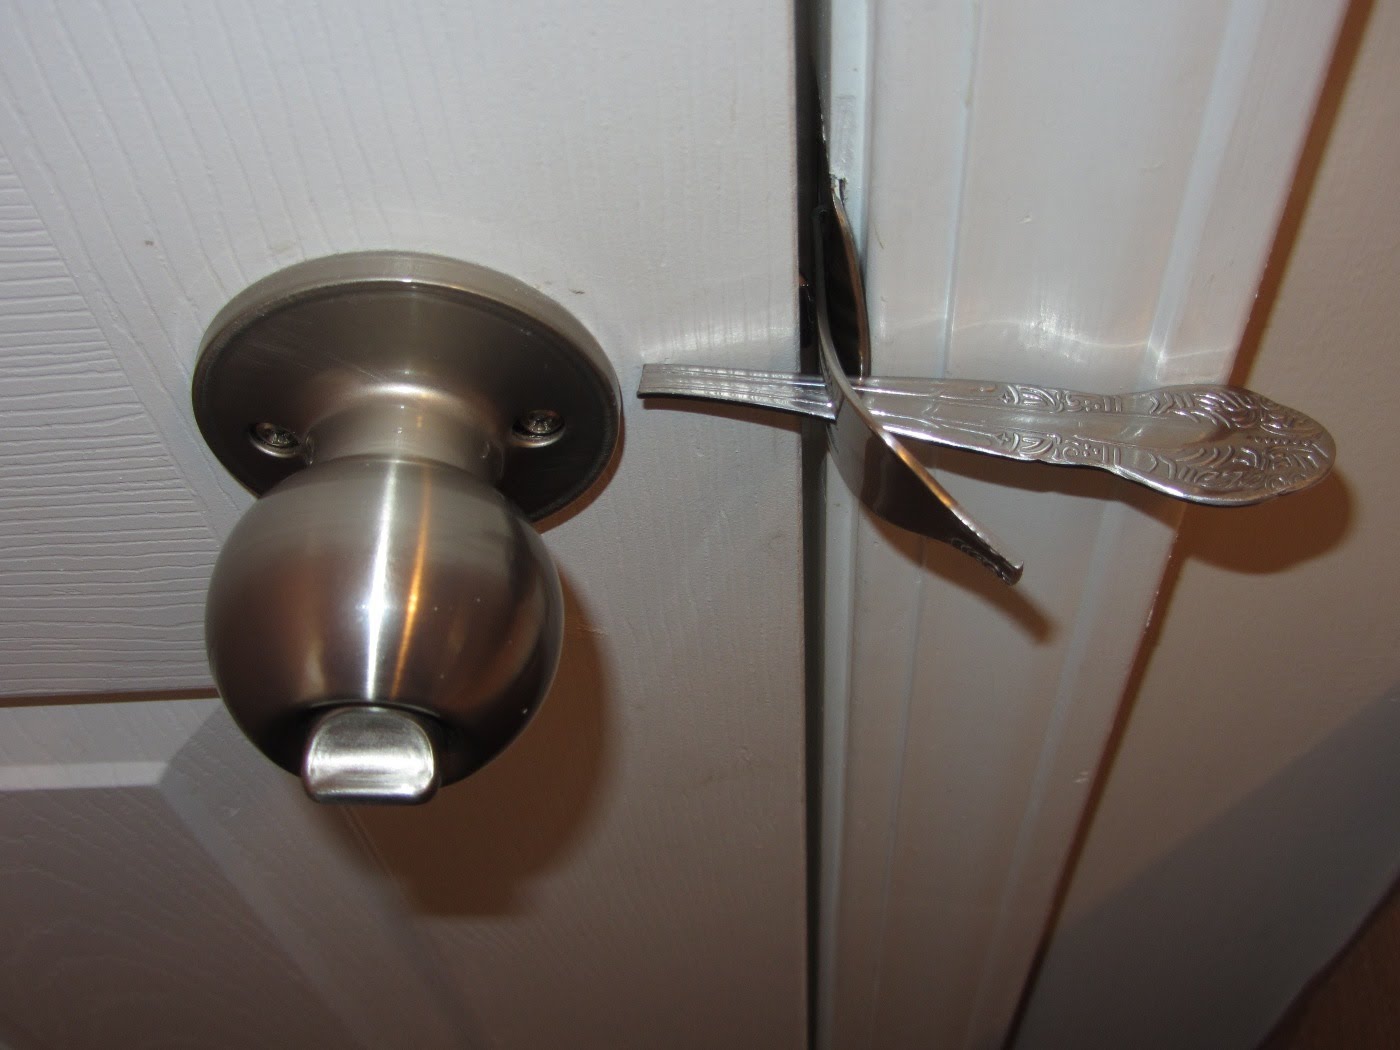 unlock door knob without key photo - 14